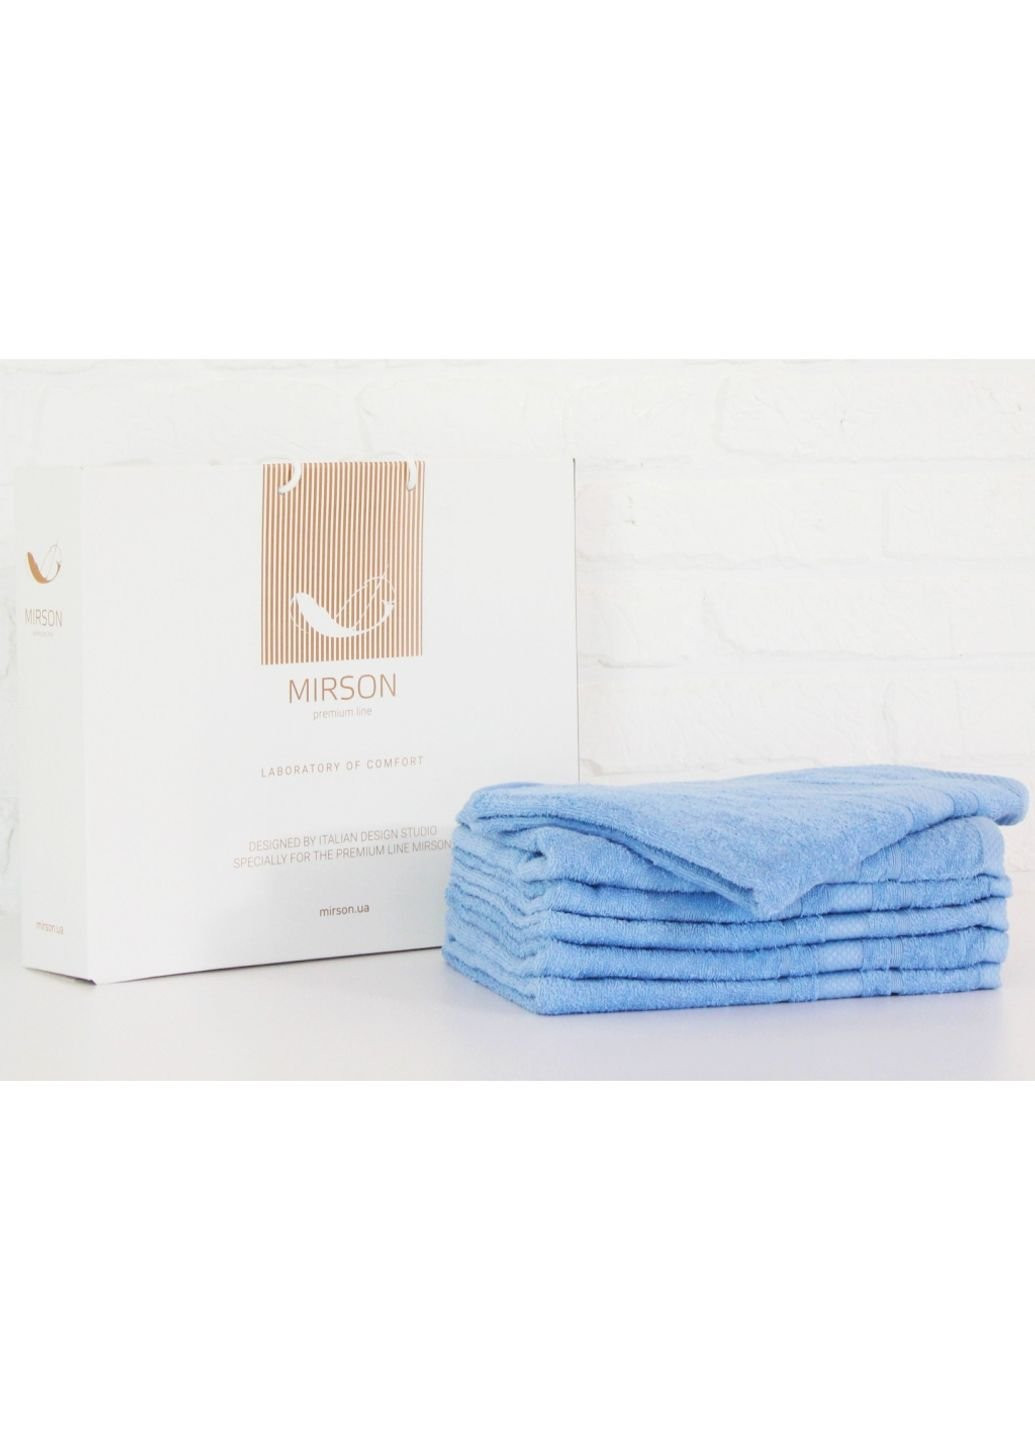 Mirson полотенце набор банных №5072 elite softness cornflower 50х90 6 шт (2200003523966) голубой производство - Украина